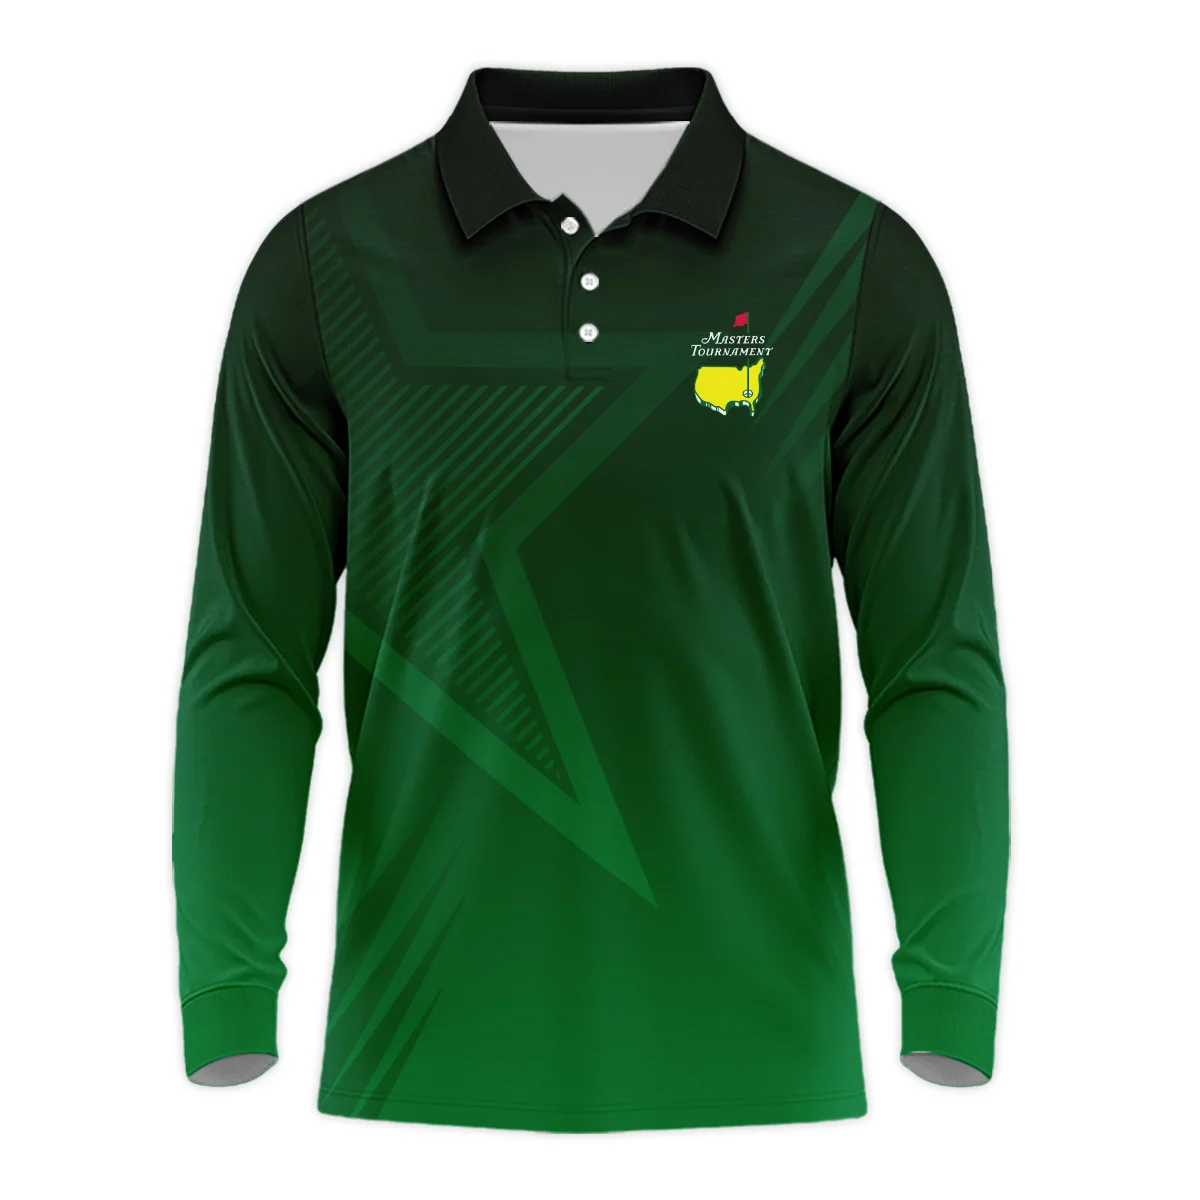 Masters Tournament Star Dark Green Pattern Unisex T-Shirt Style Classic T-Shirt